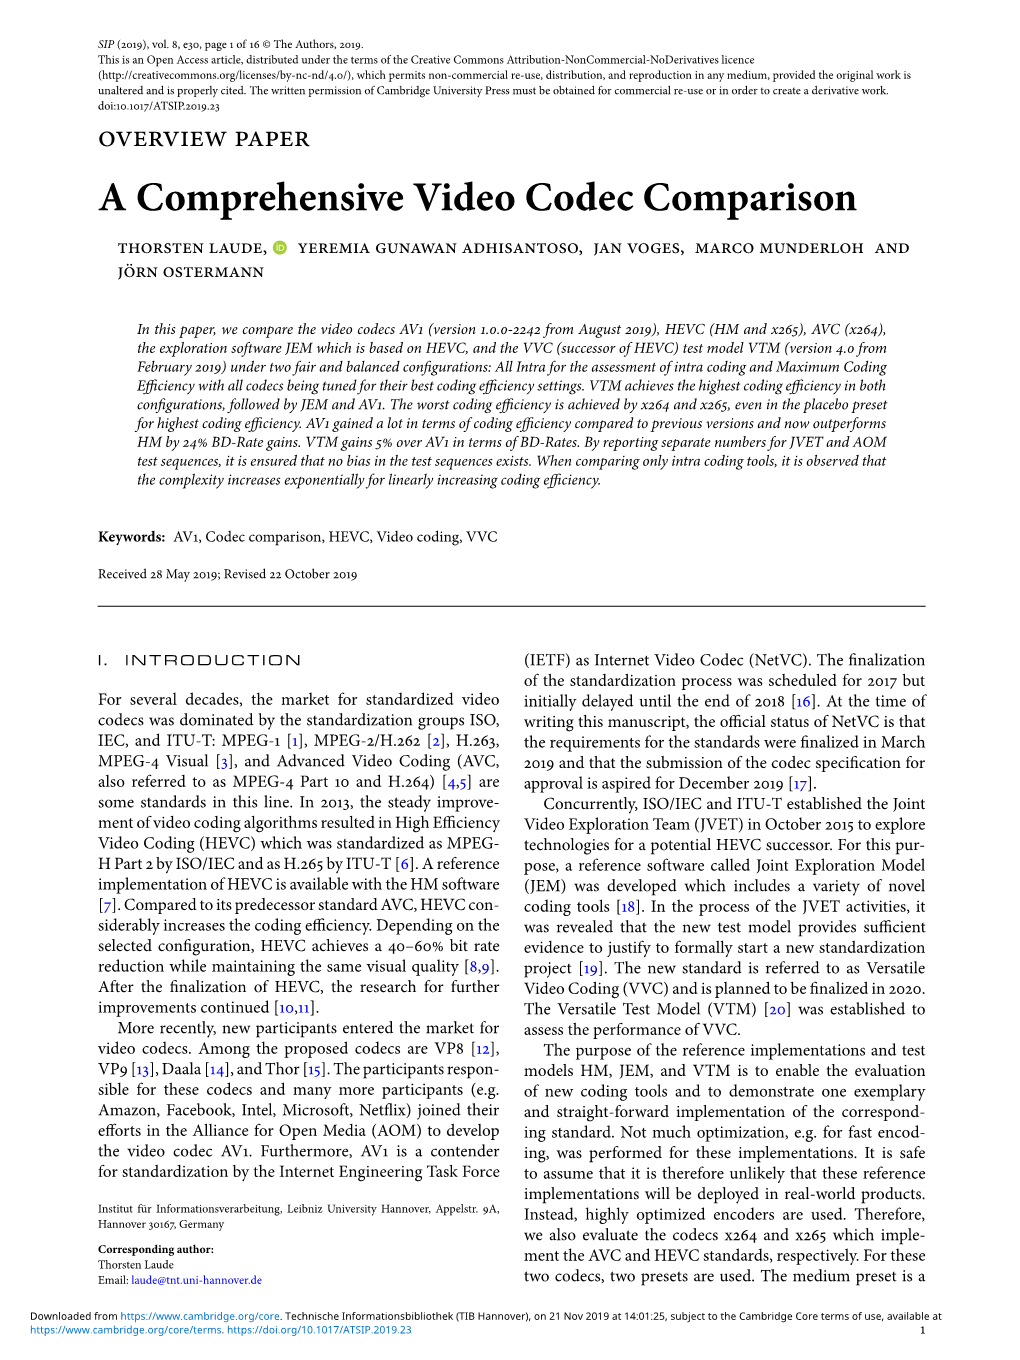 A Comprehensive Video Codec Comparison Thorsten Laude, Yeremia Gunawan Adhisantoso, Jan Voges, Marco Munderloh and Jörn Ostermann